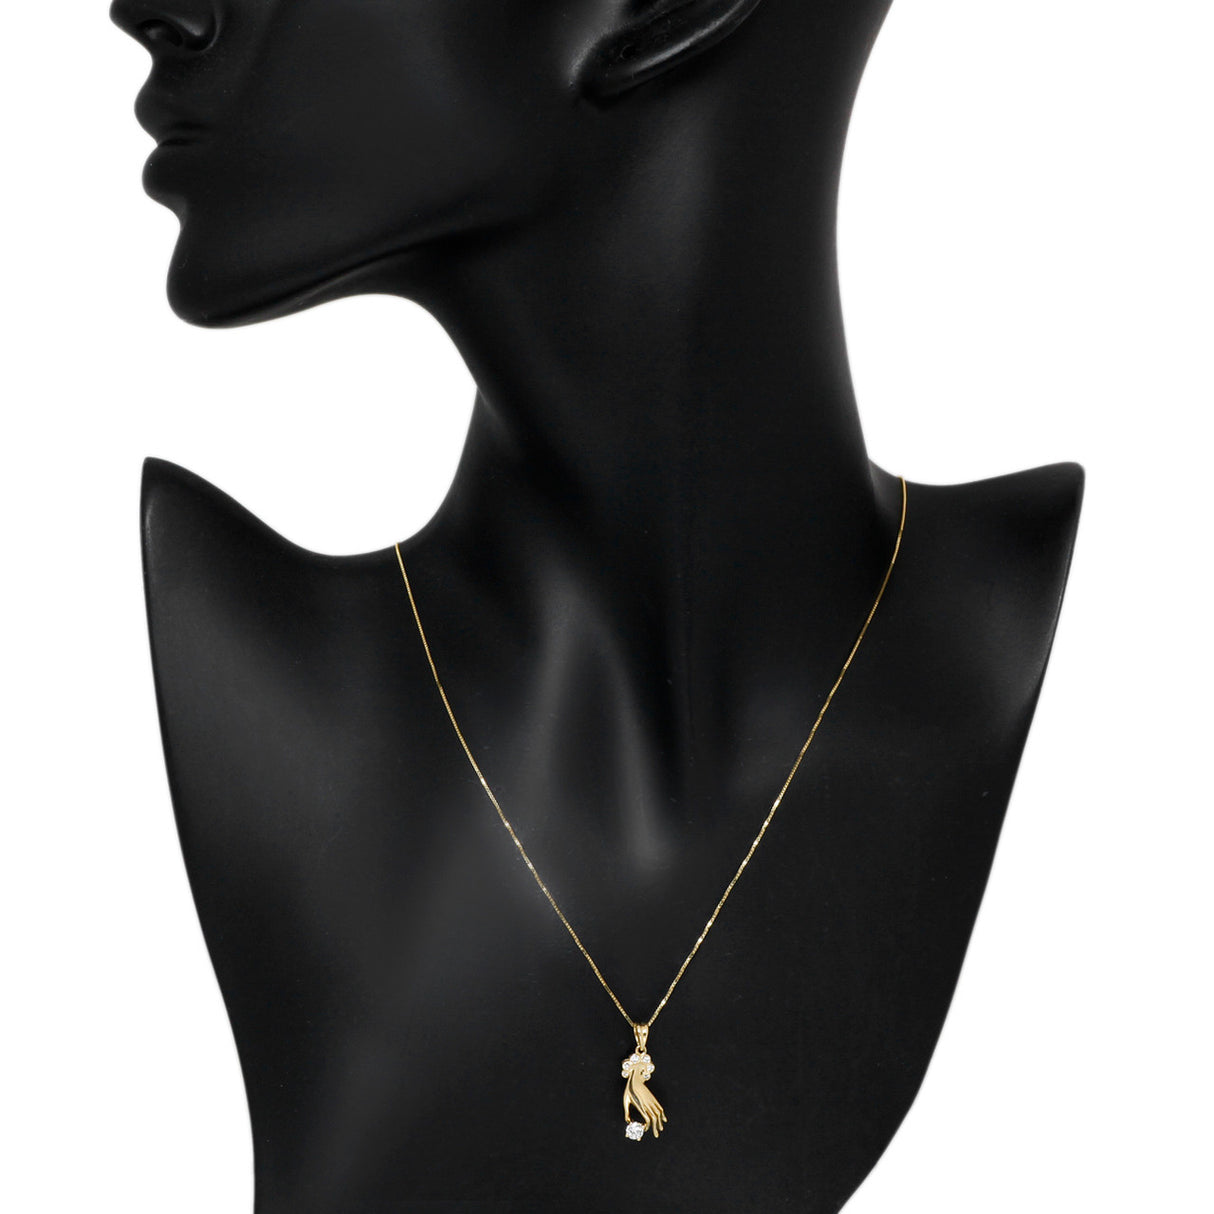 18K Yellow Gold 0.24 Carat Diamond Pendant Necklace